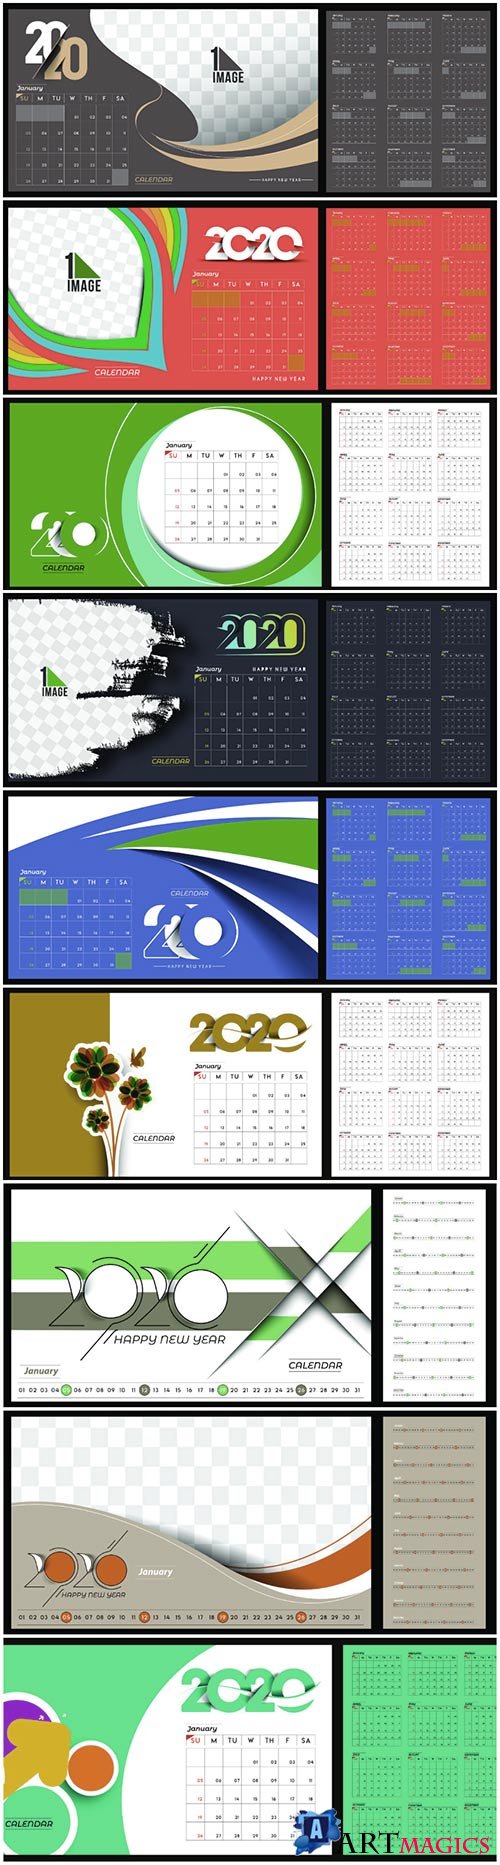 Happy new year 2020 Calendar